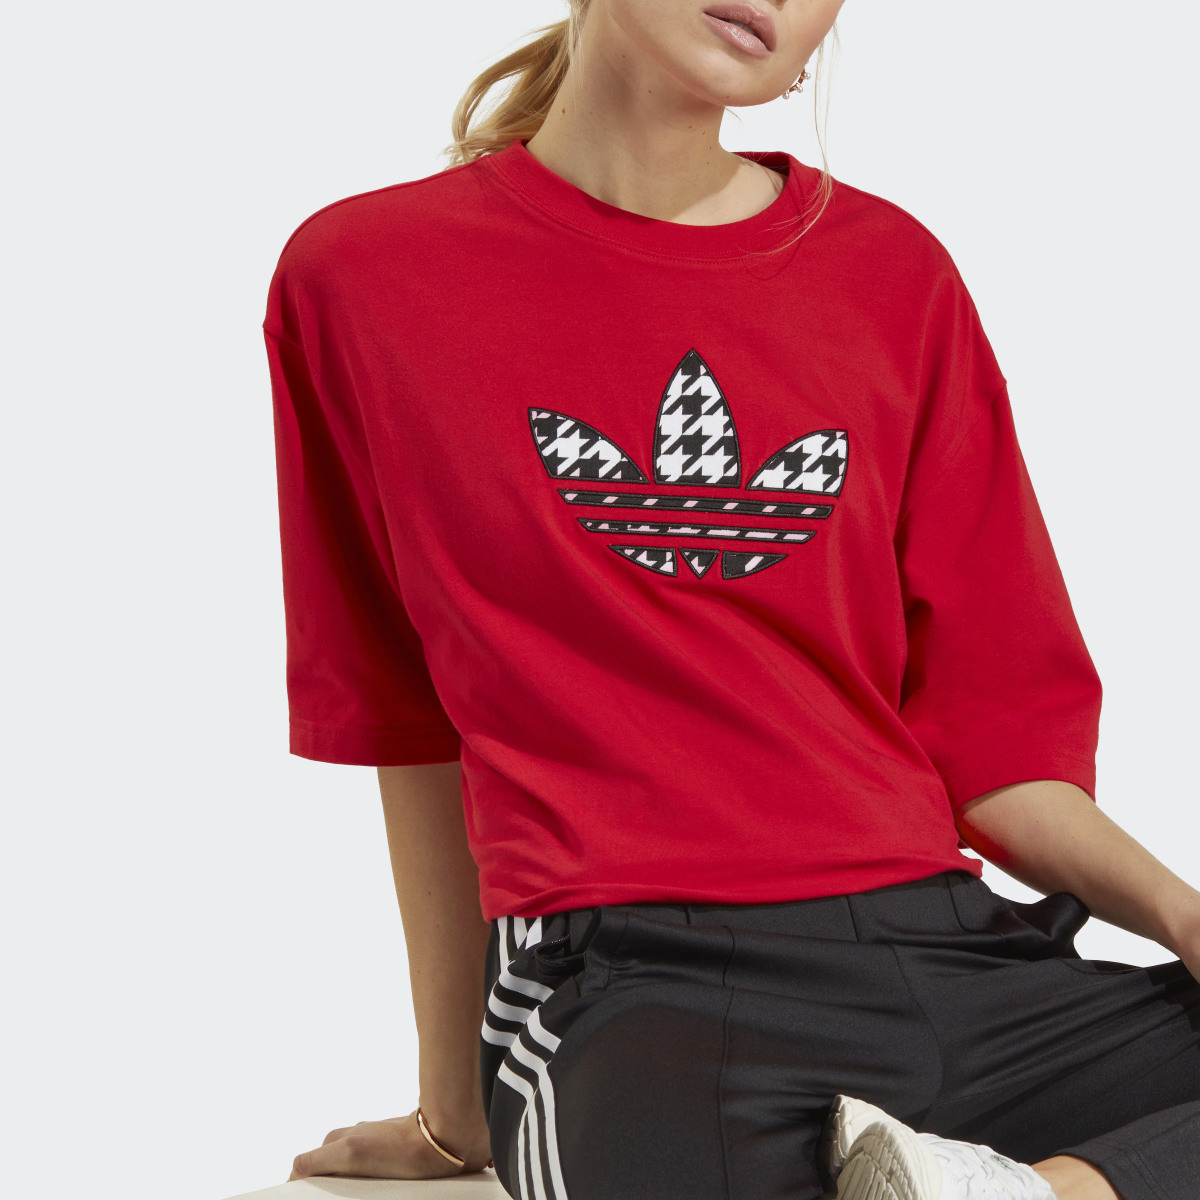 Adidas T-shirt Originals Houndstooth Trefoil Infill. 8